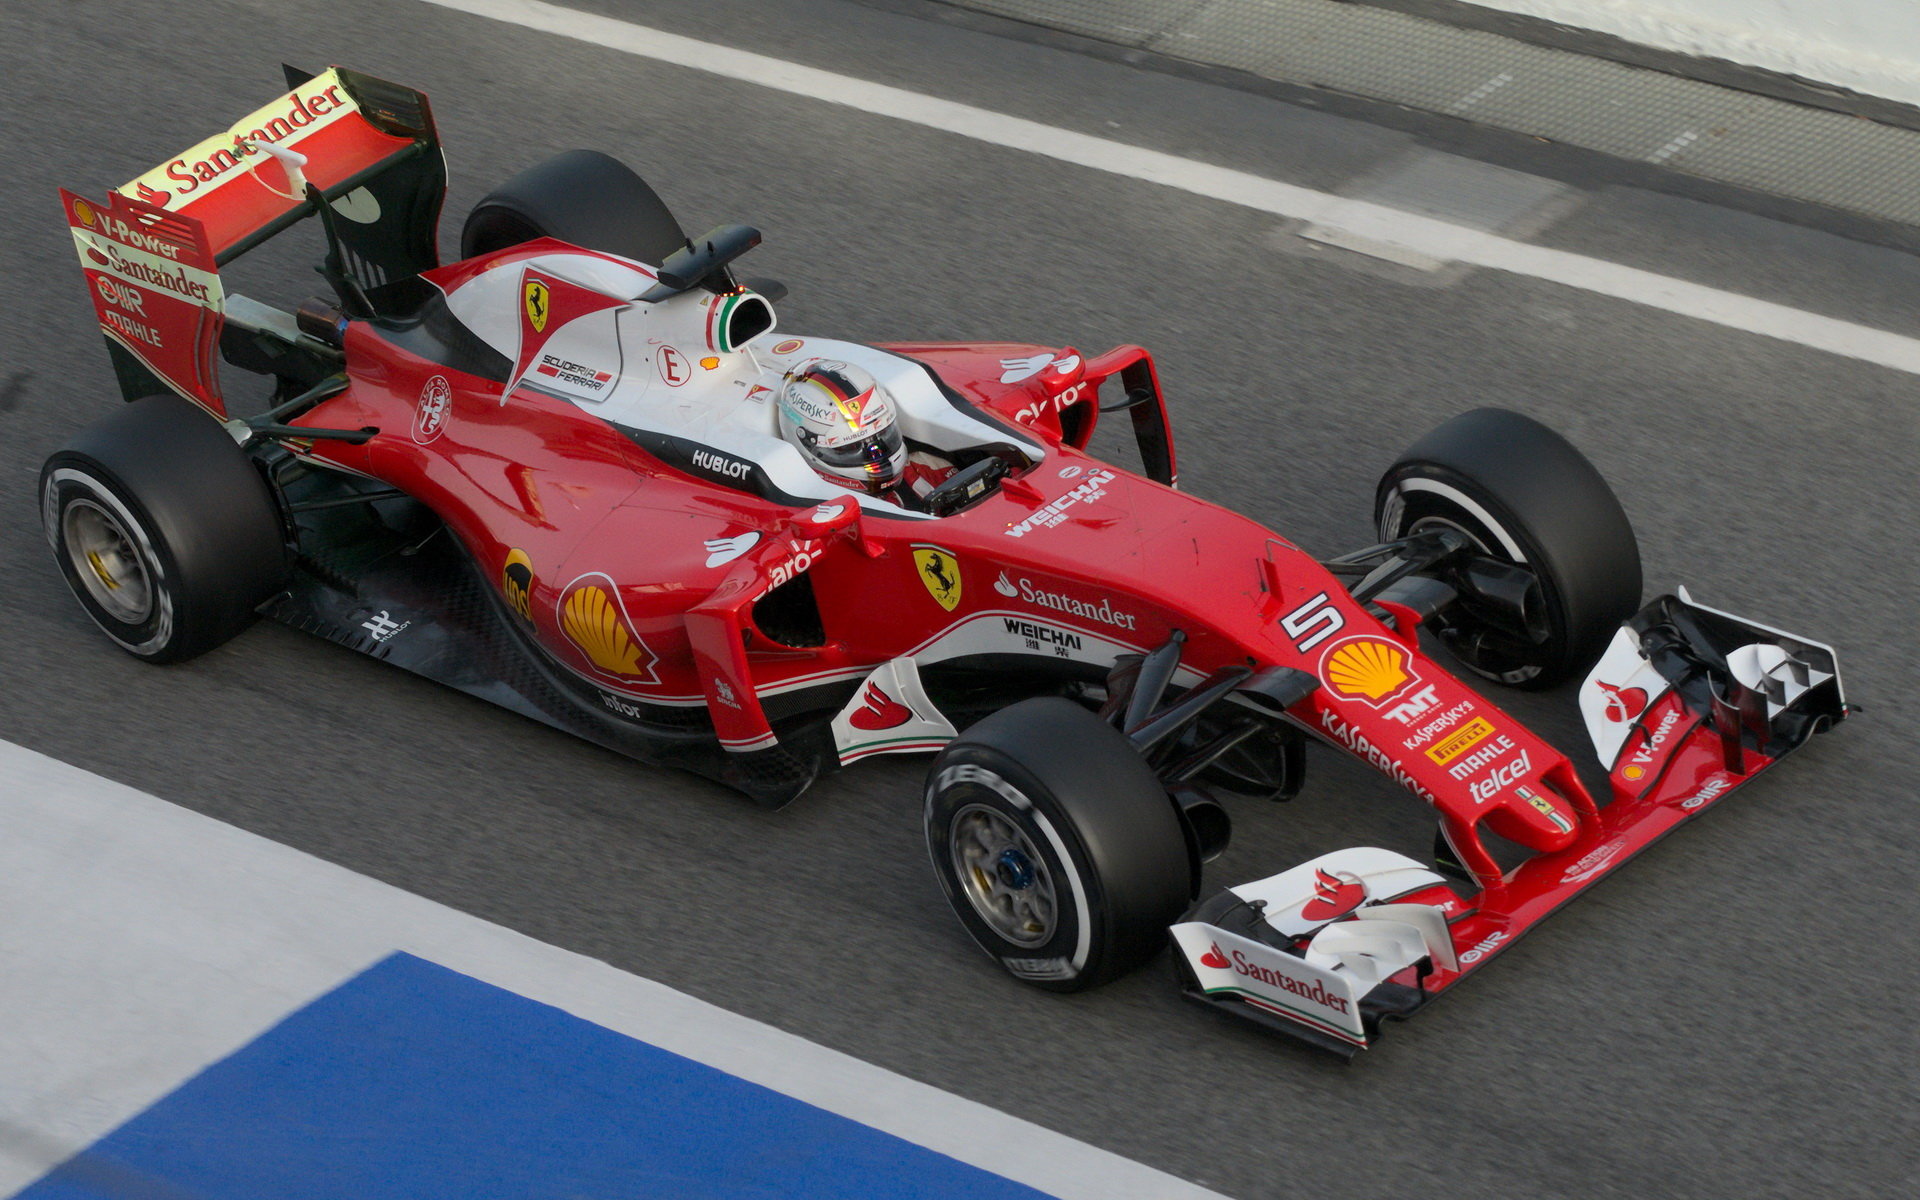 Bude Ferrari letos stačit na Mercedesy?